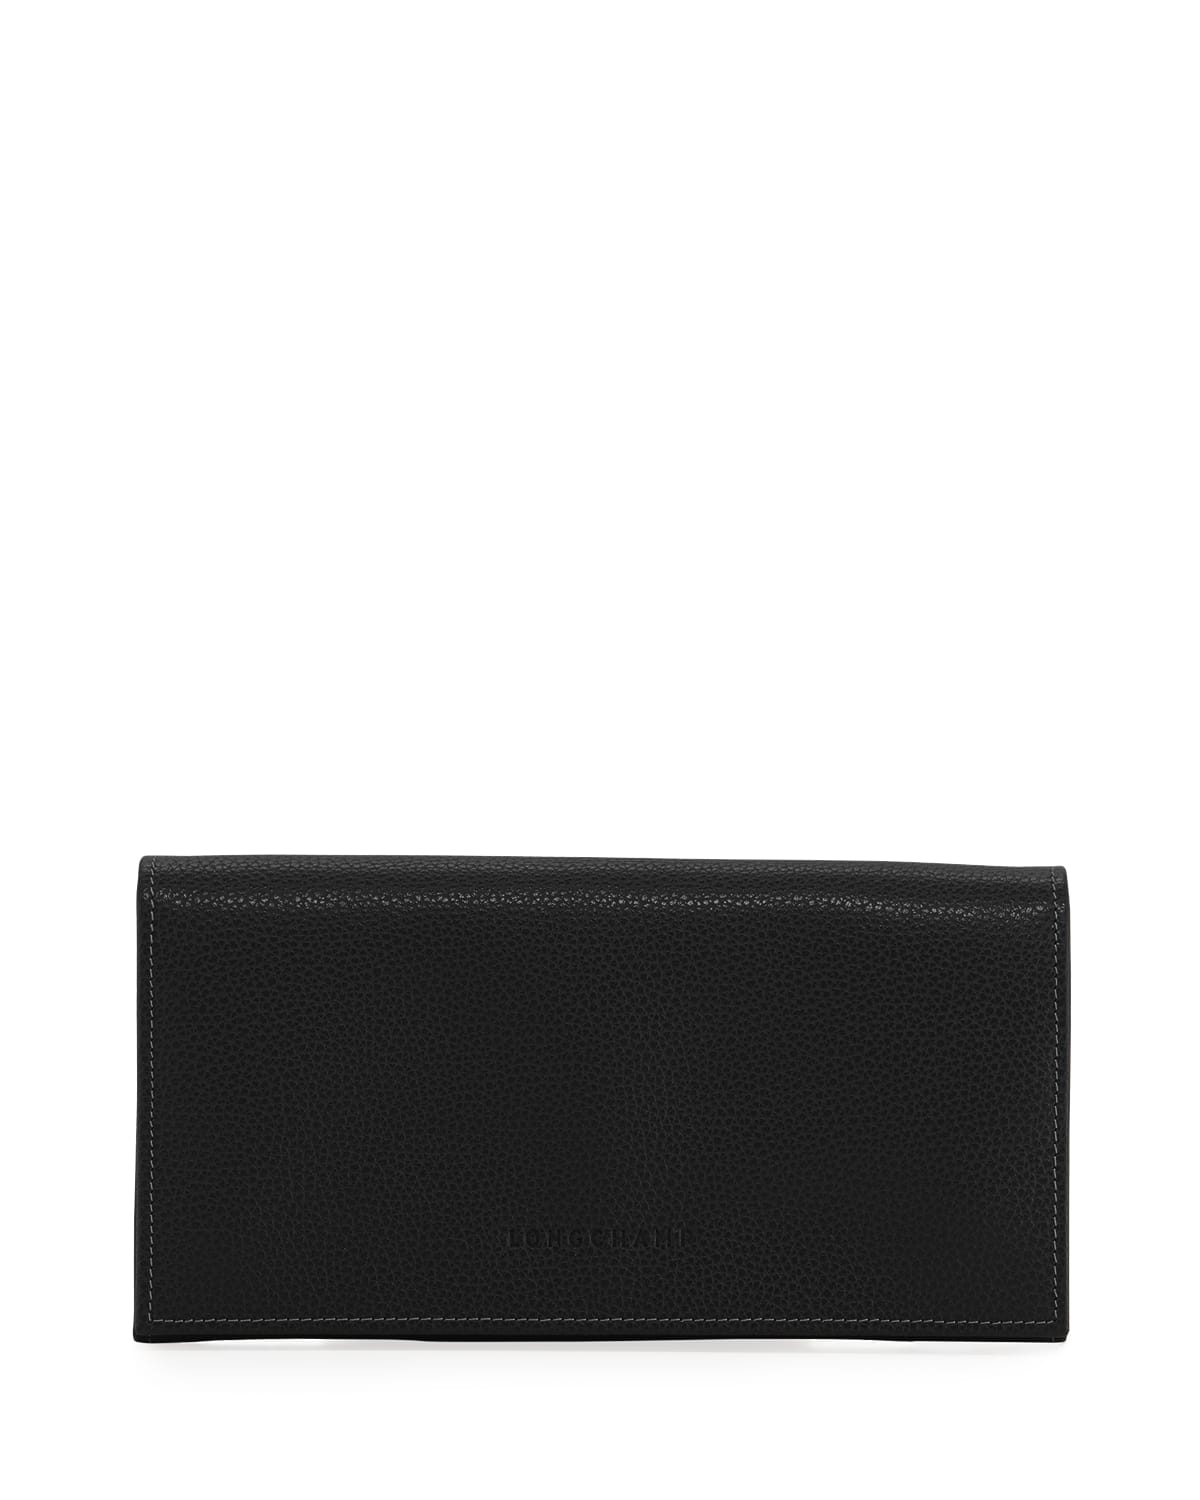 Snap Closure Wallet | Neiman Marcus